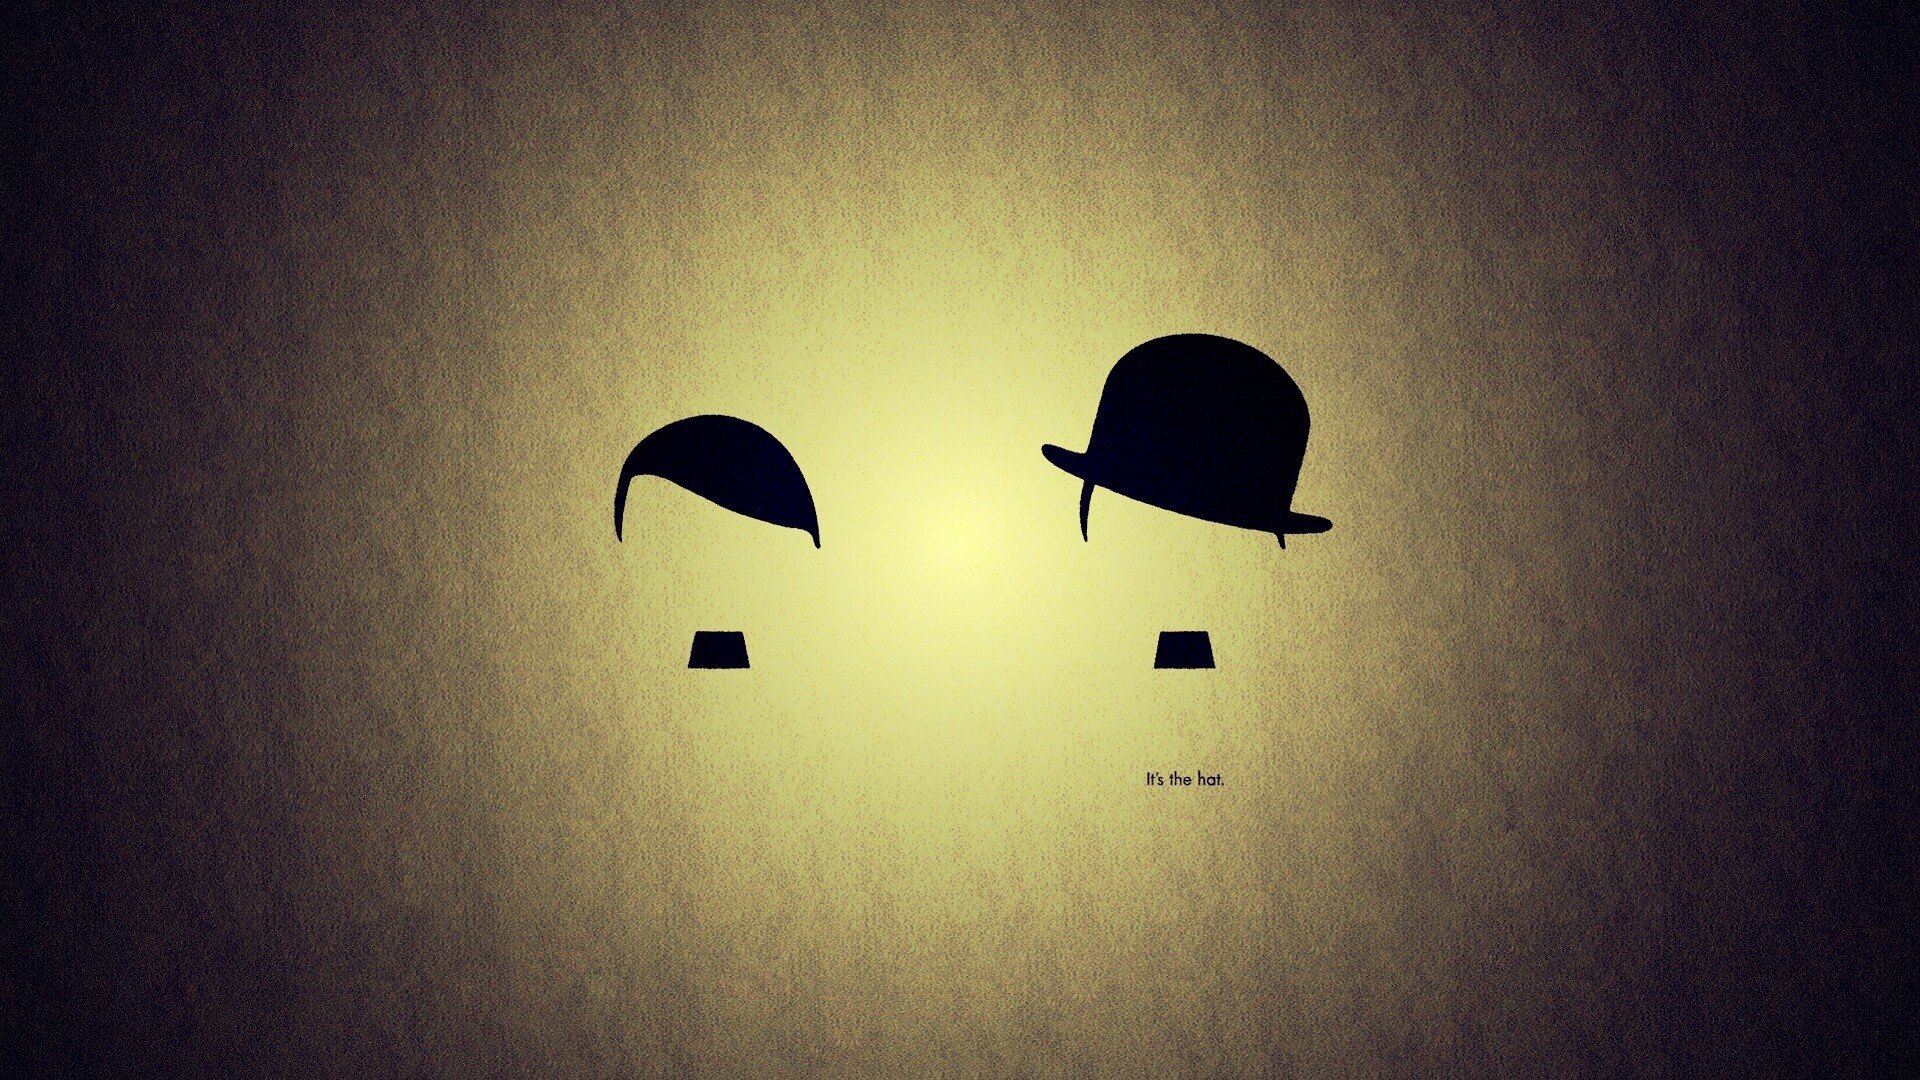 Обои шляпа. Дело в шляпе слоган. Шляпа Минимализм. Обои со шляпой. Шляпа 1920 1080.